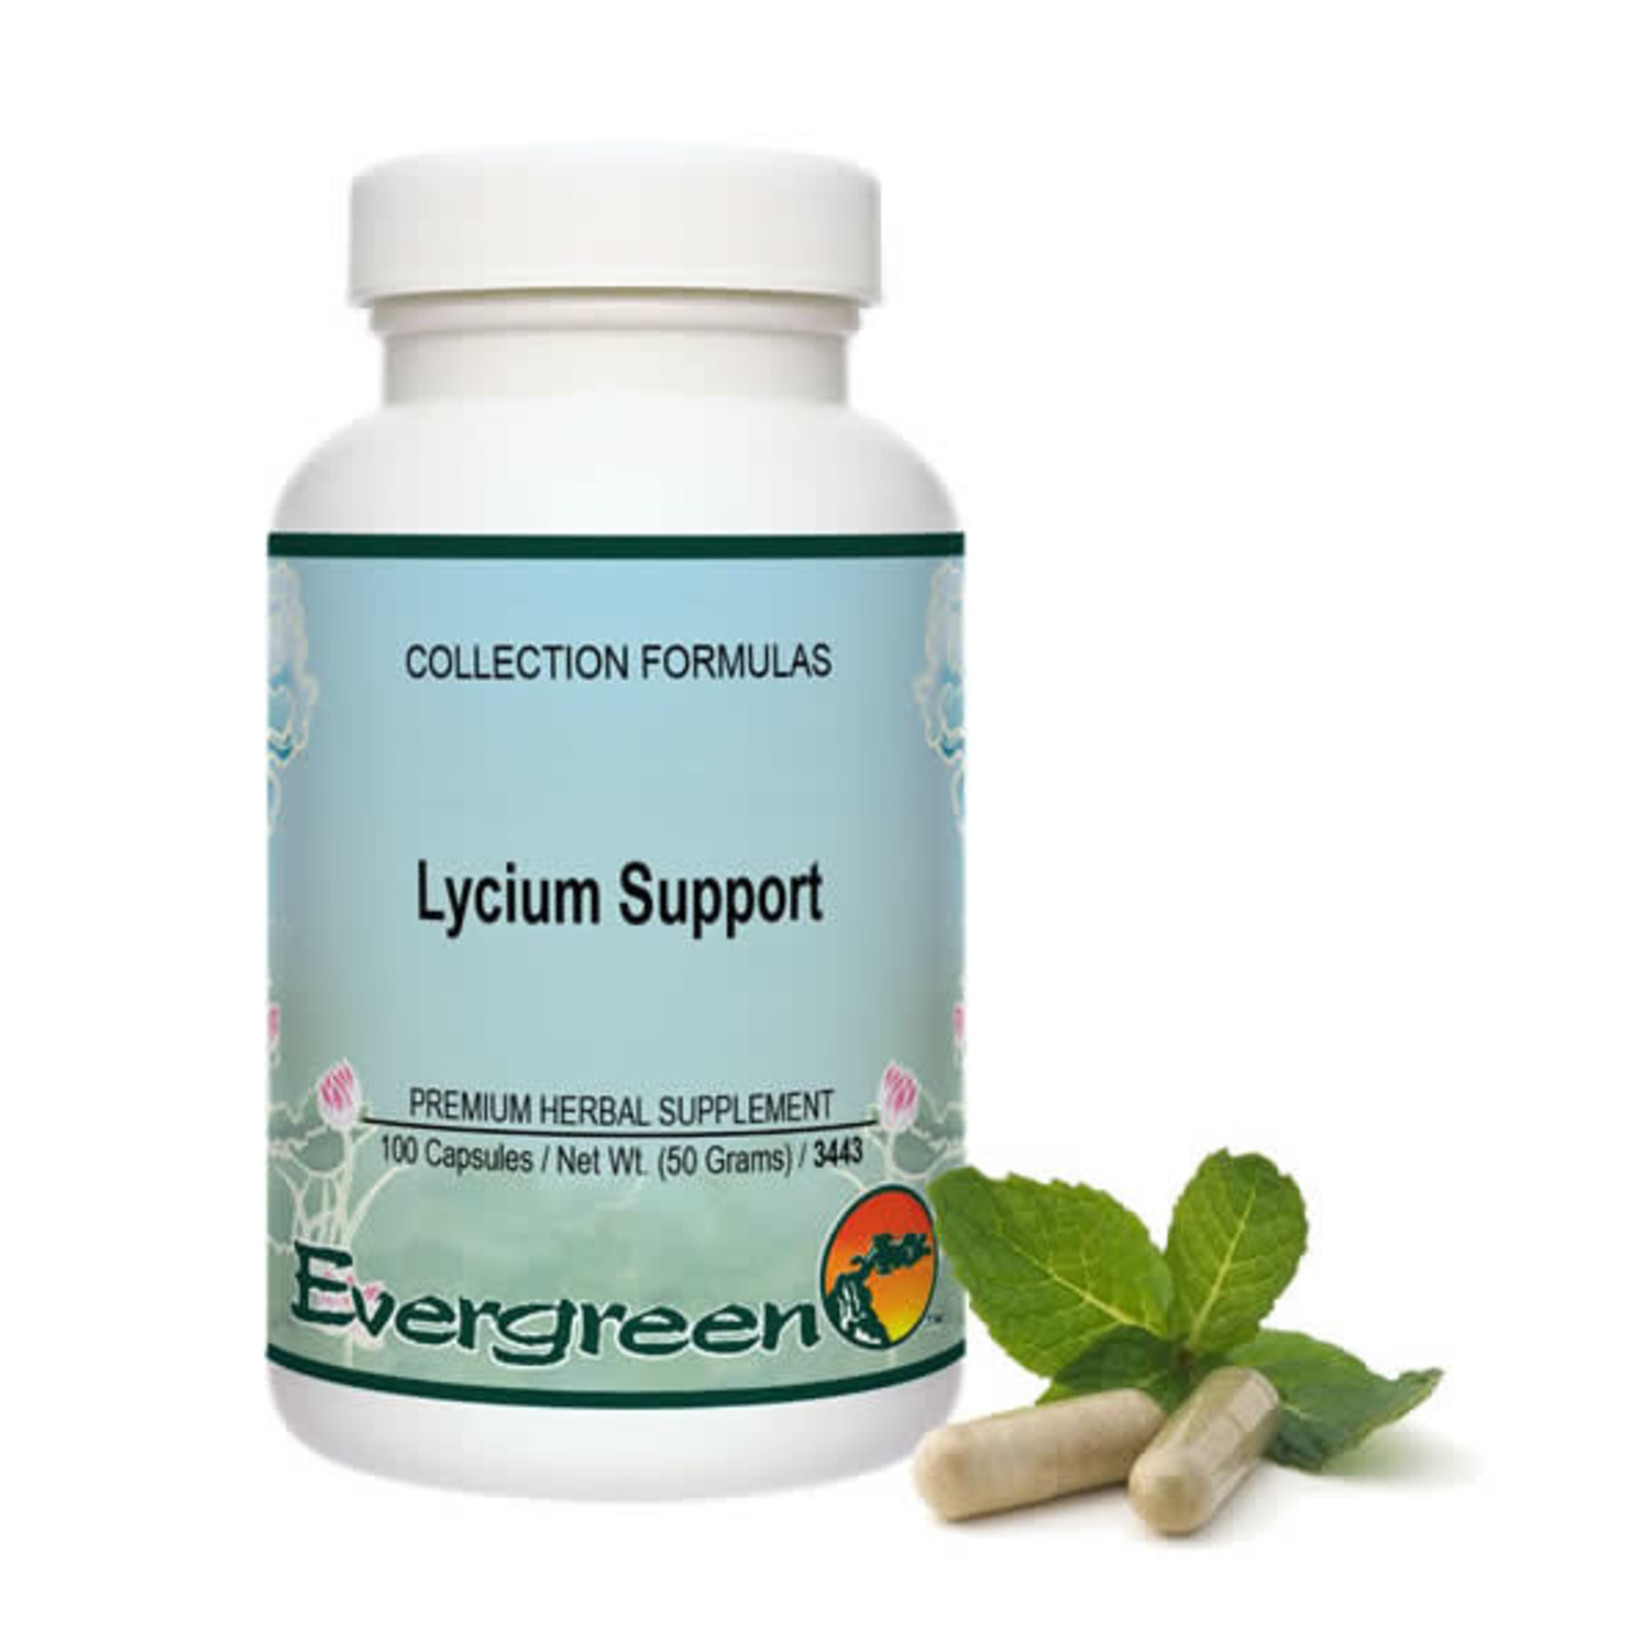 Lycium Support (Evergreen Herbs)